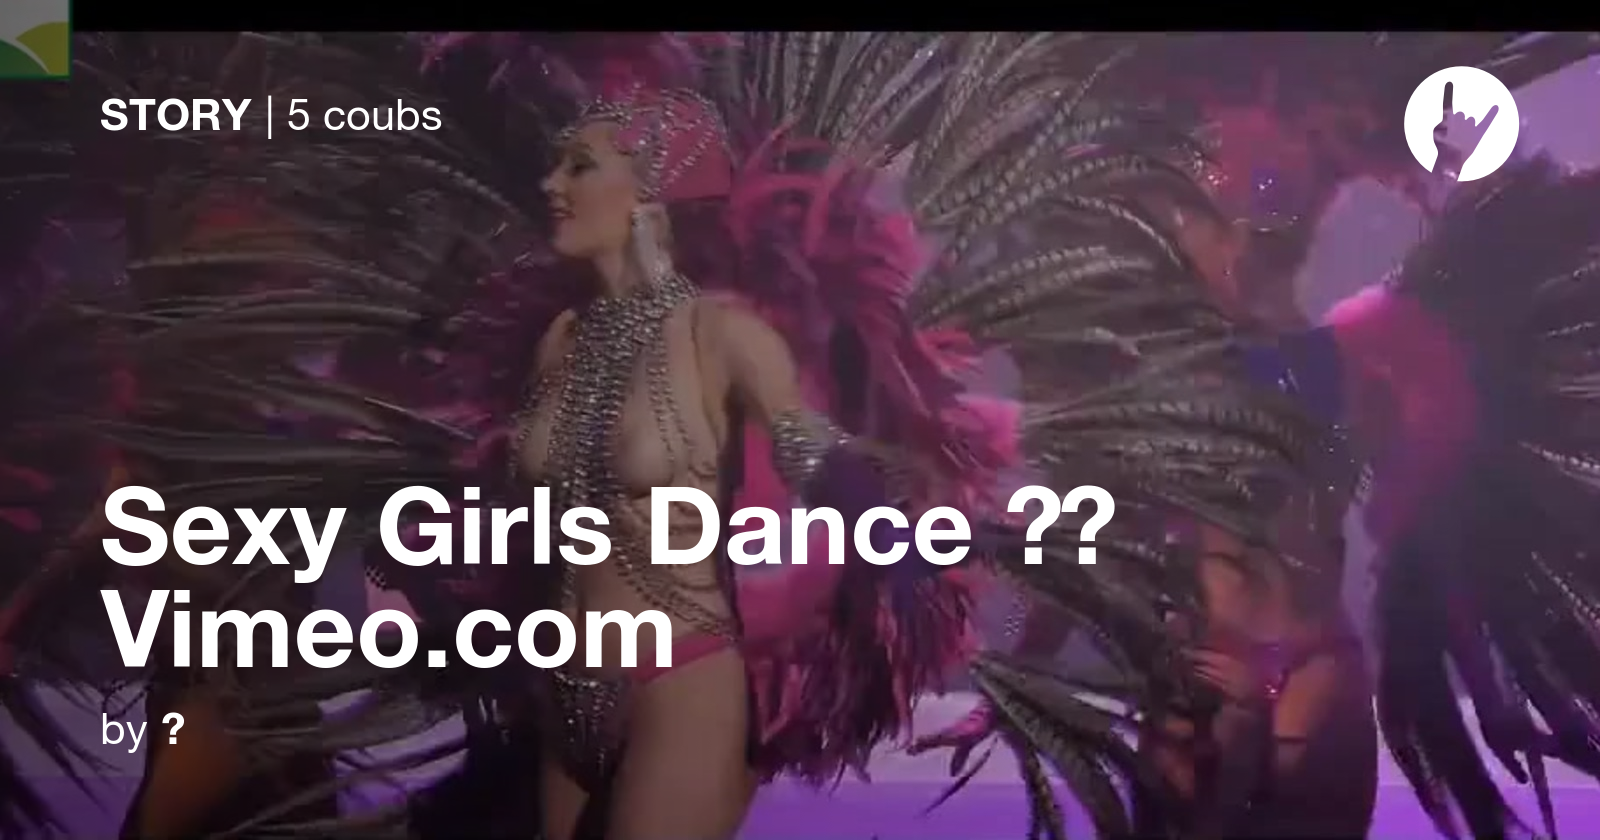 Sexy Girls Dance ᴴᴰ Vimeo.com - Coub